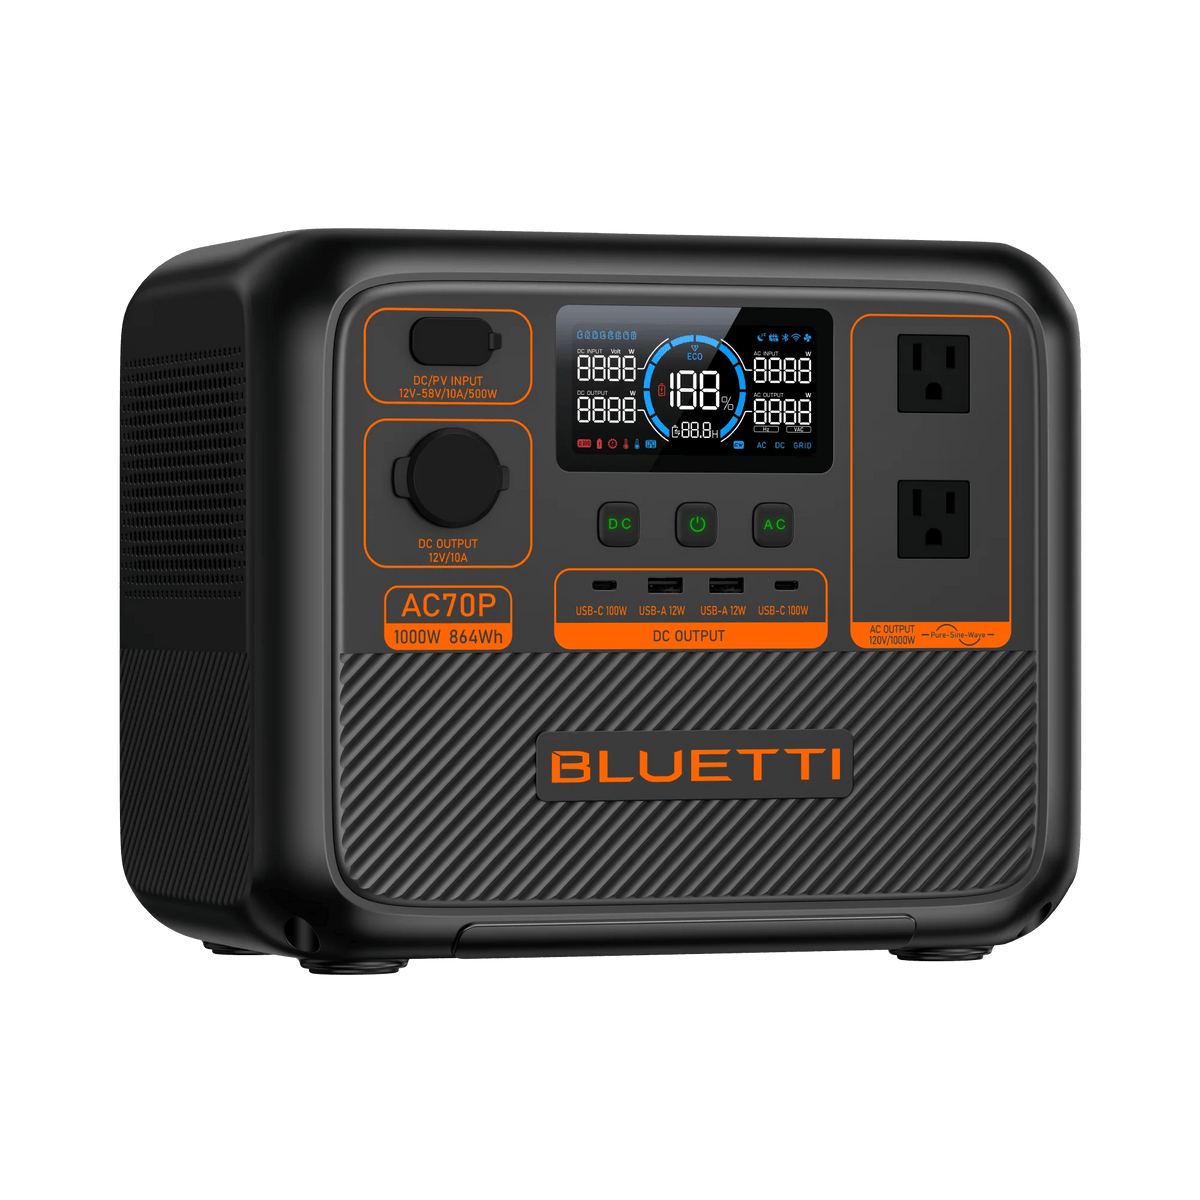 Bluetti Power Station Bluetti AC70P Portable Power Station | 1000W 864Wh